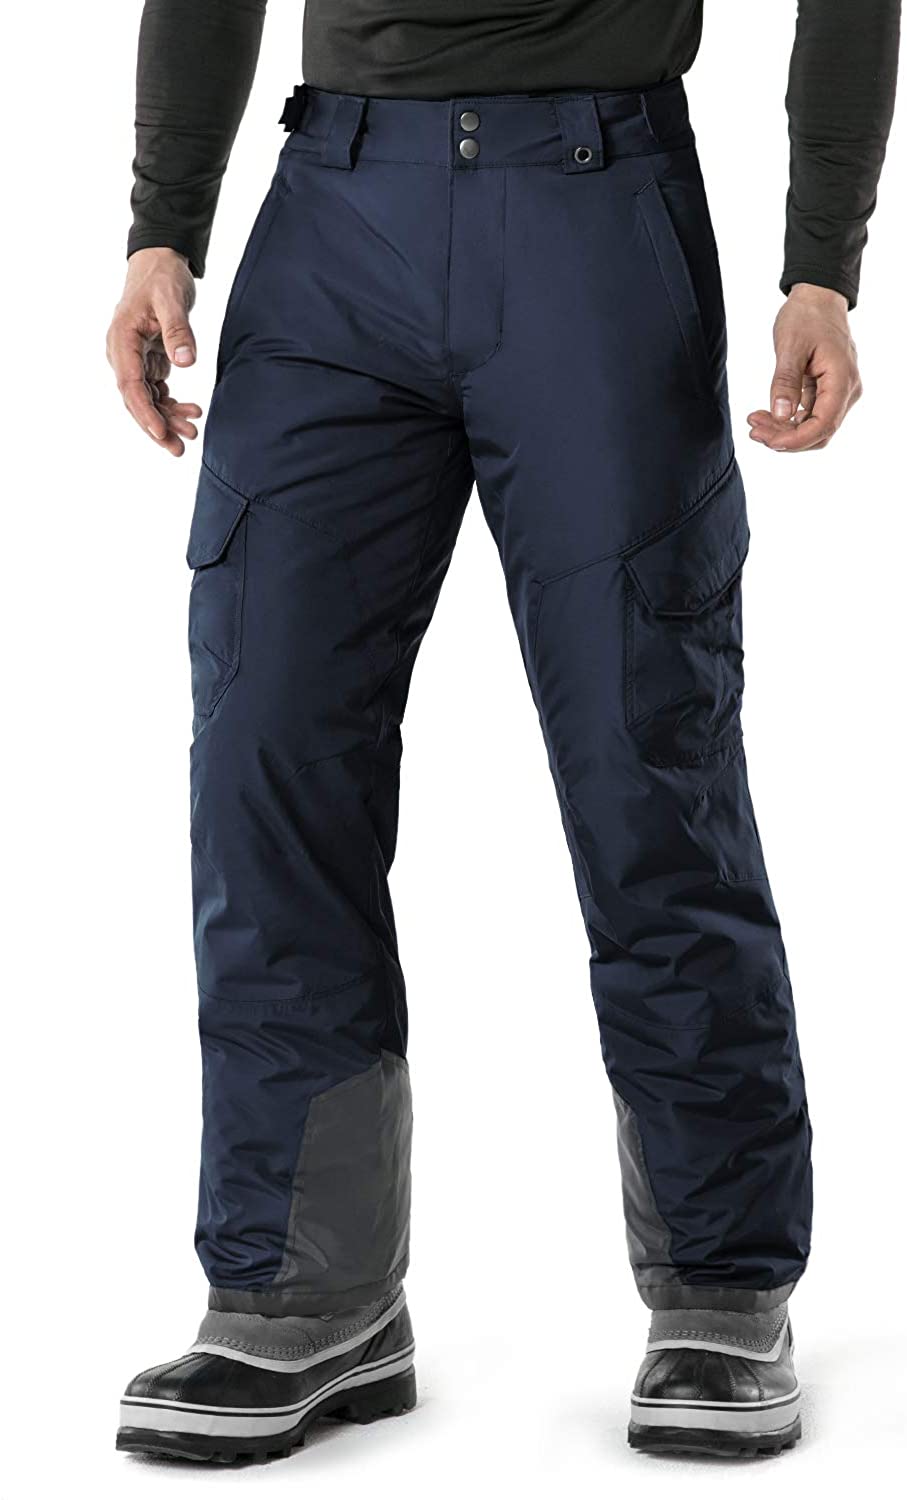 TSLA Men's Winter Snow Pants, Waterproof Insulated Ski Pants